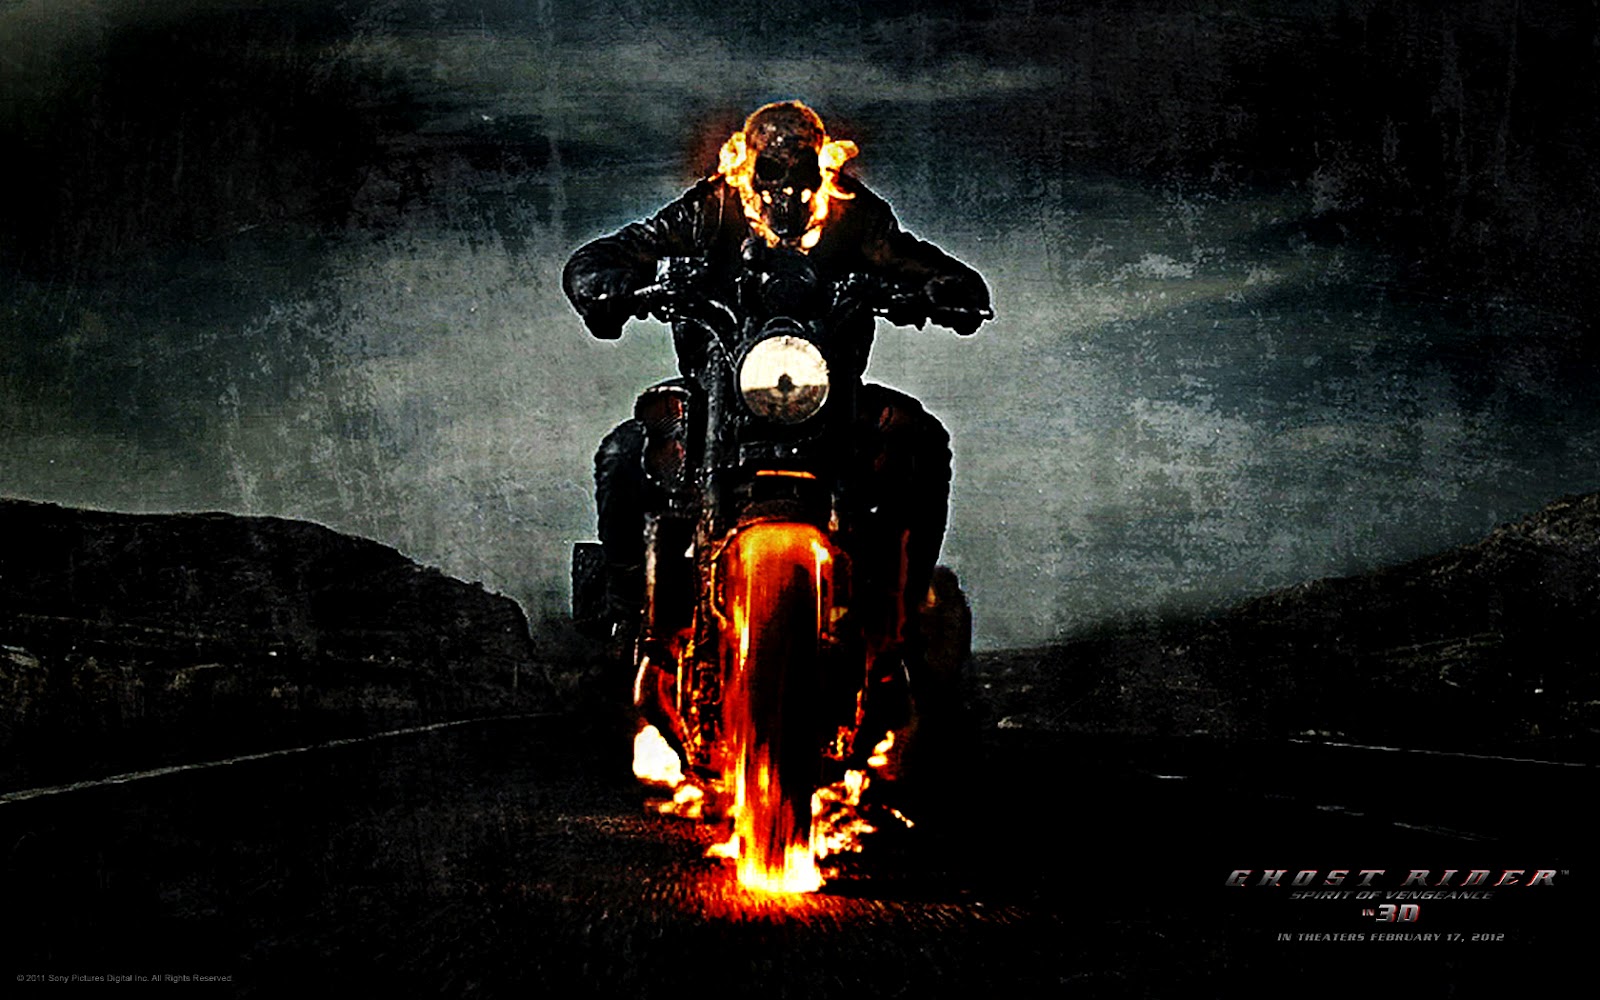 Ghost Rider 2 Bike Wallpaper